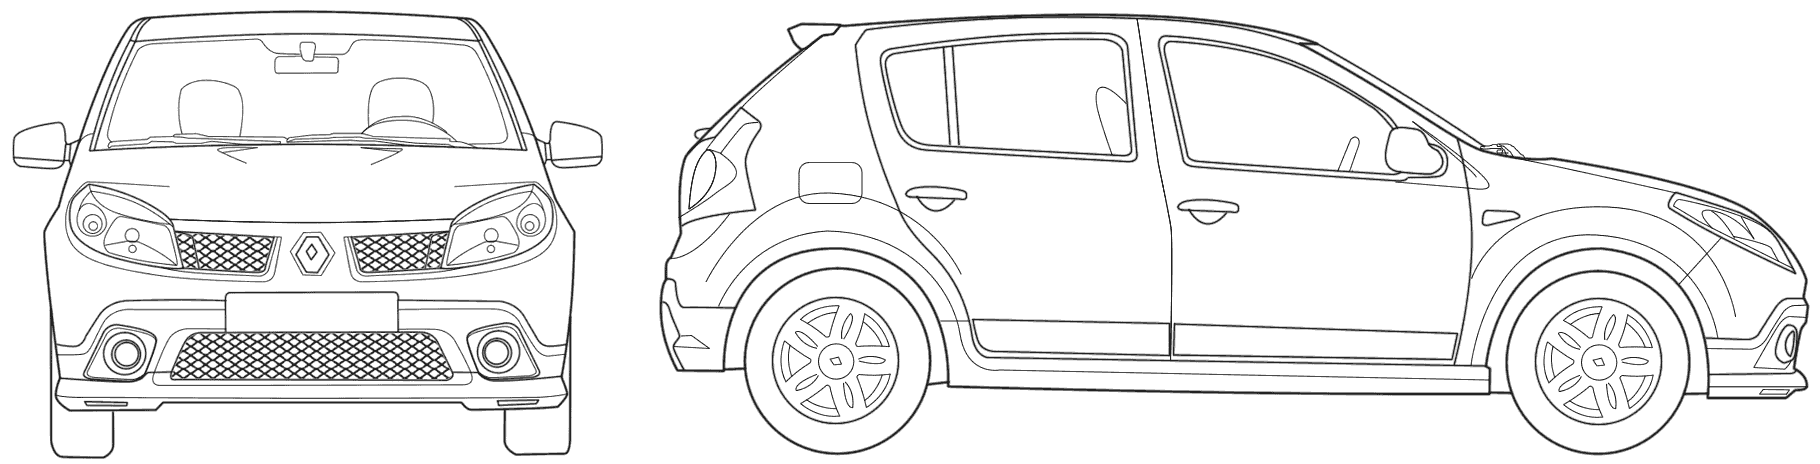 Renault Sandero blueprint